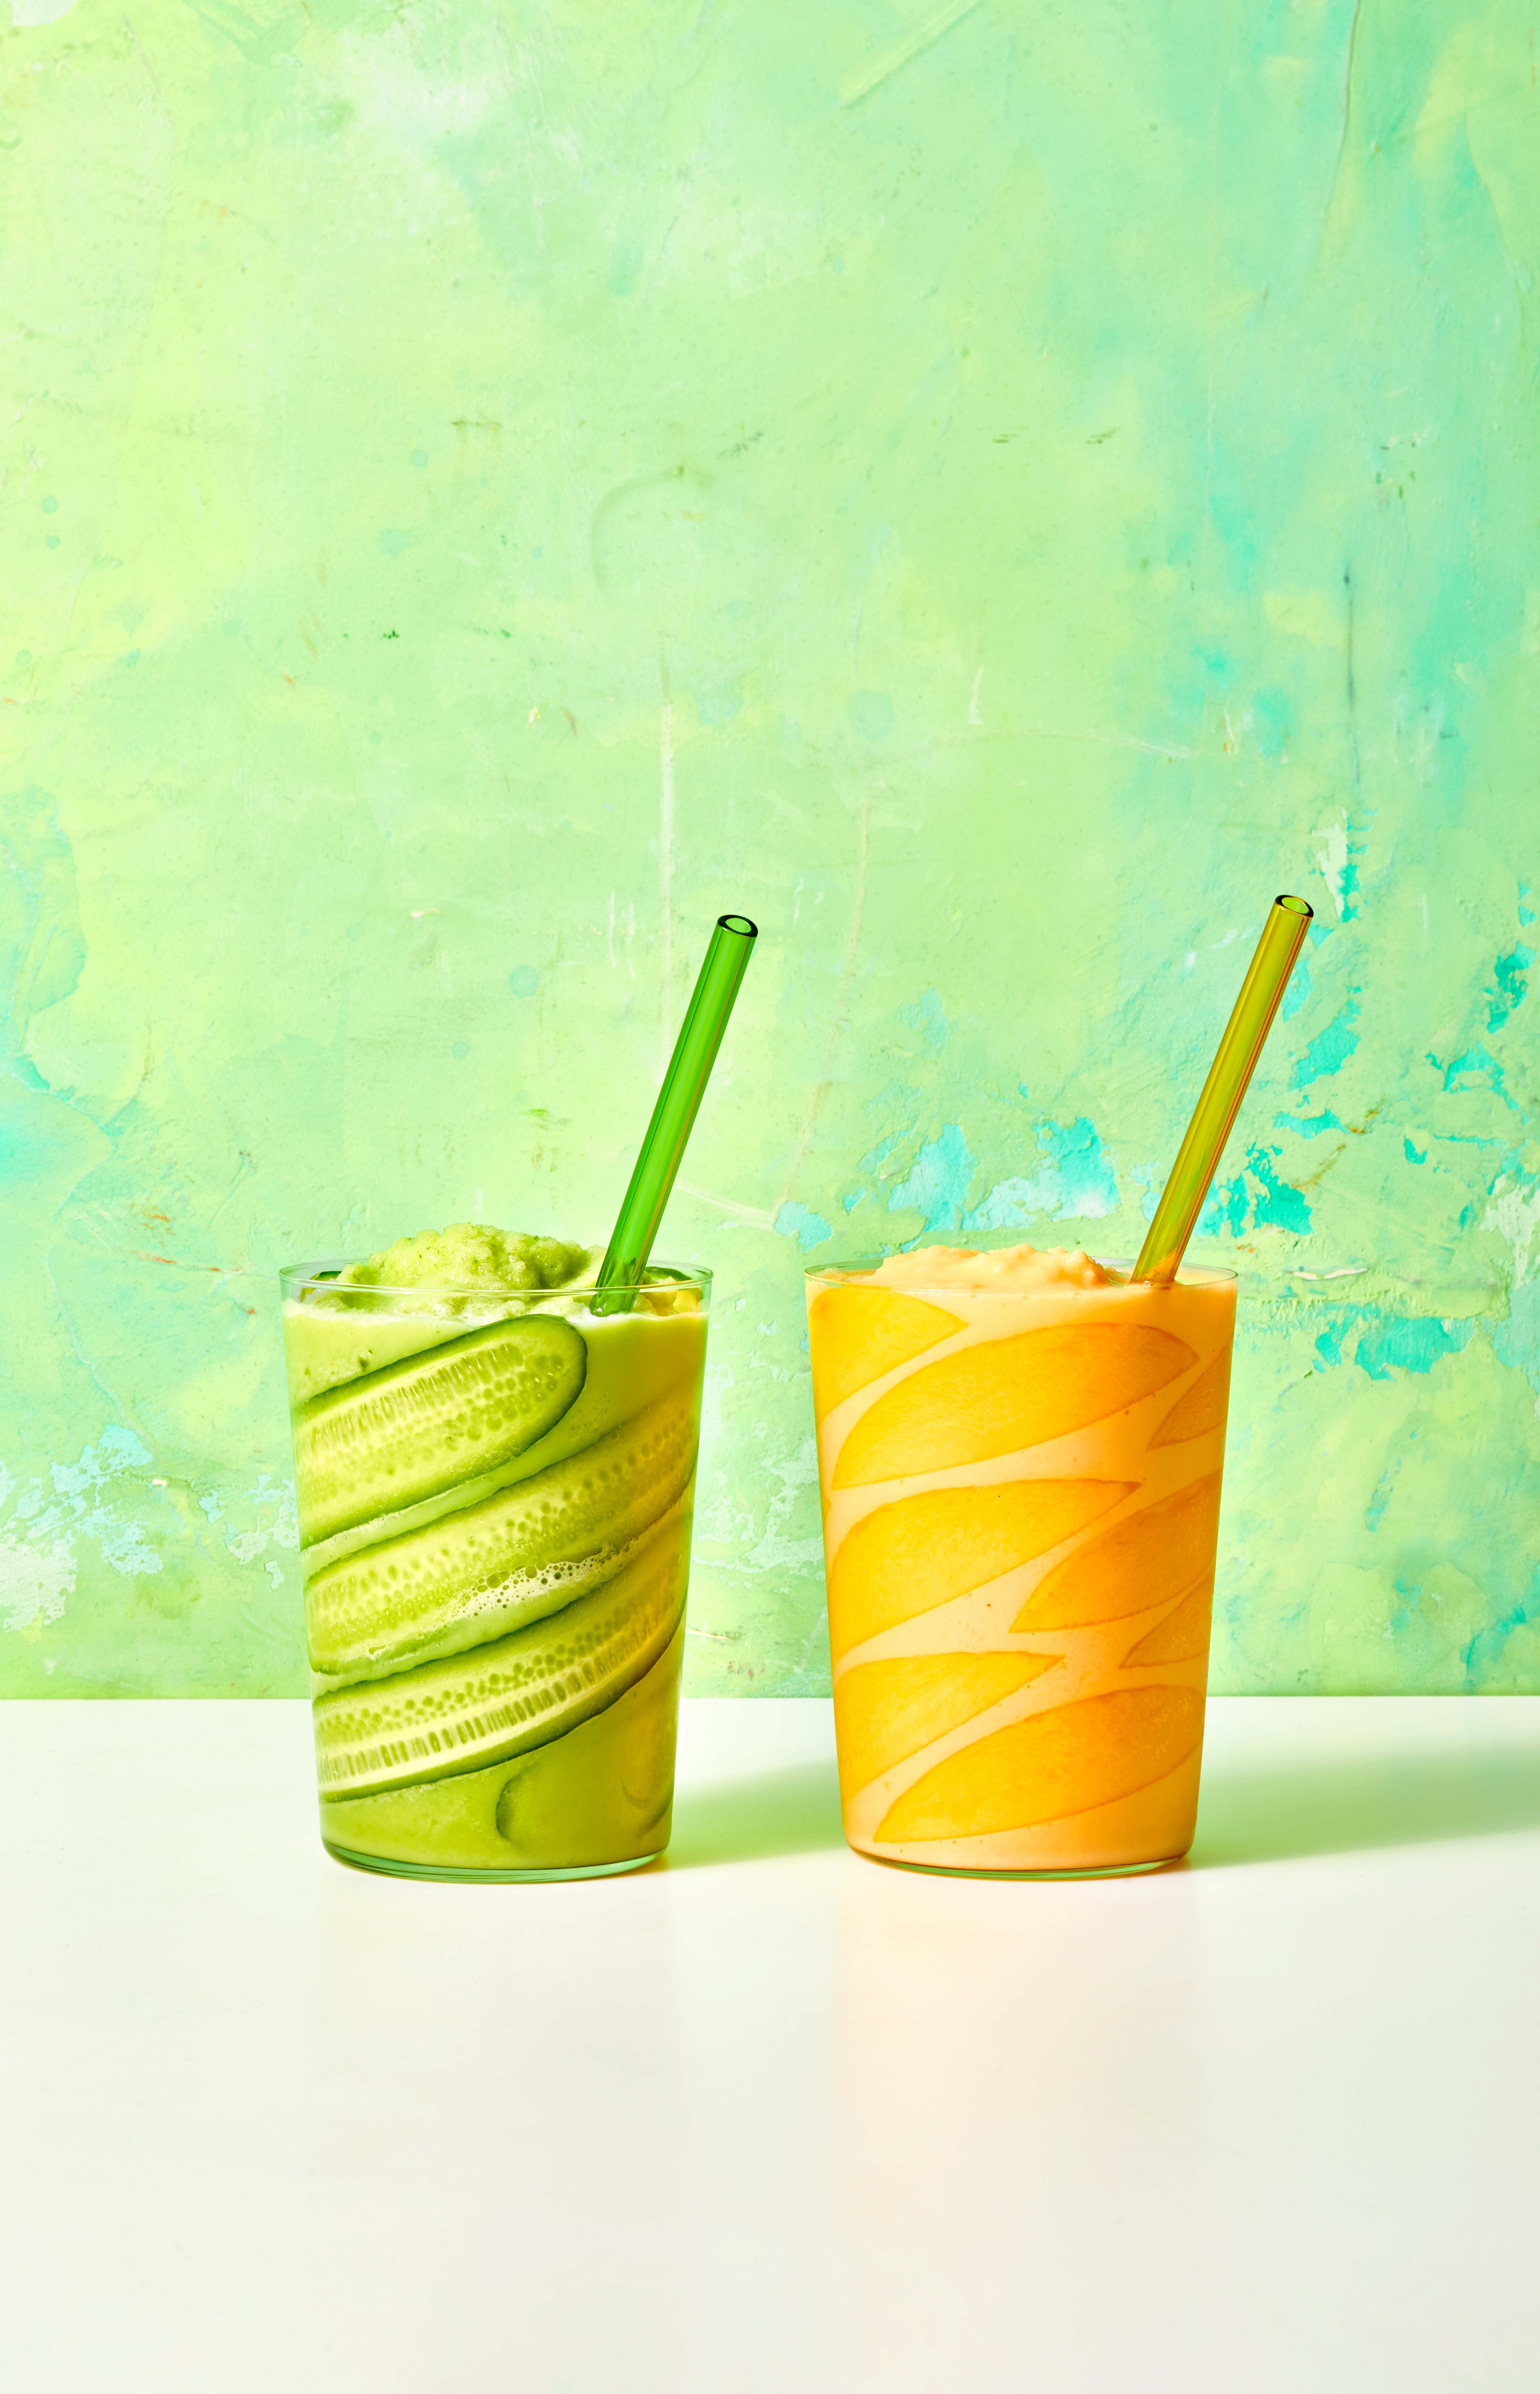 14 Deliciously Healthy Green Smoothie Recipes